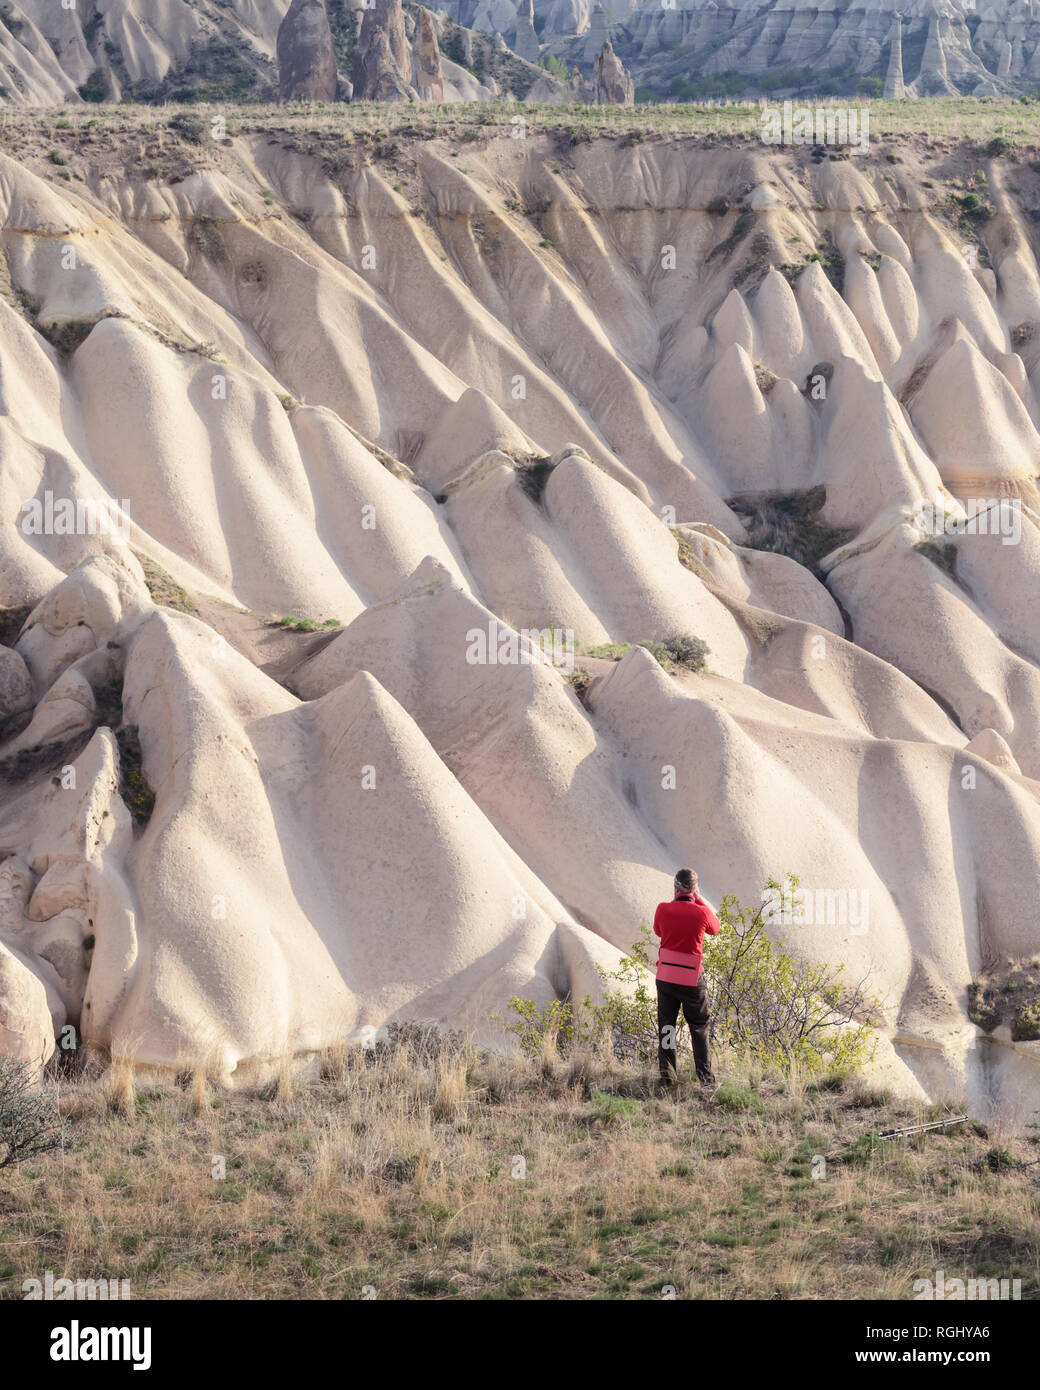 Día increíbles montañas en Cappadocia, Turquía. Fotógrafo en chaqueta roja toma de fotografía increíble de las colinas. Fotografía paisajística Foto de stock